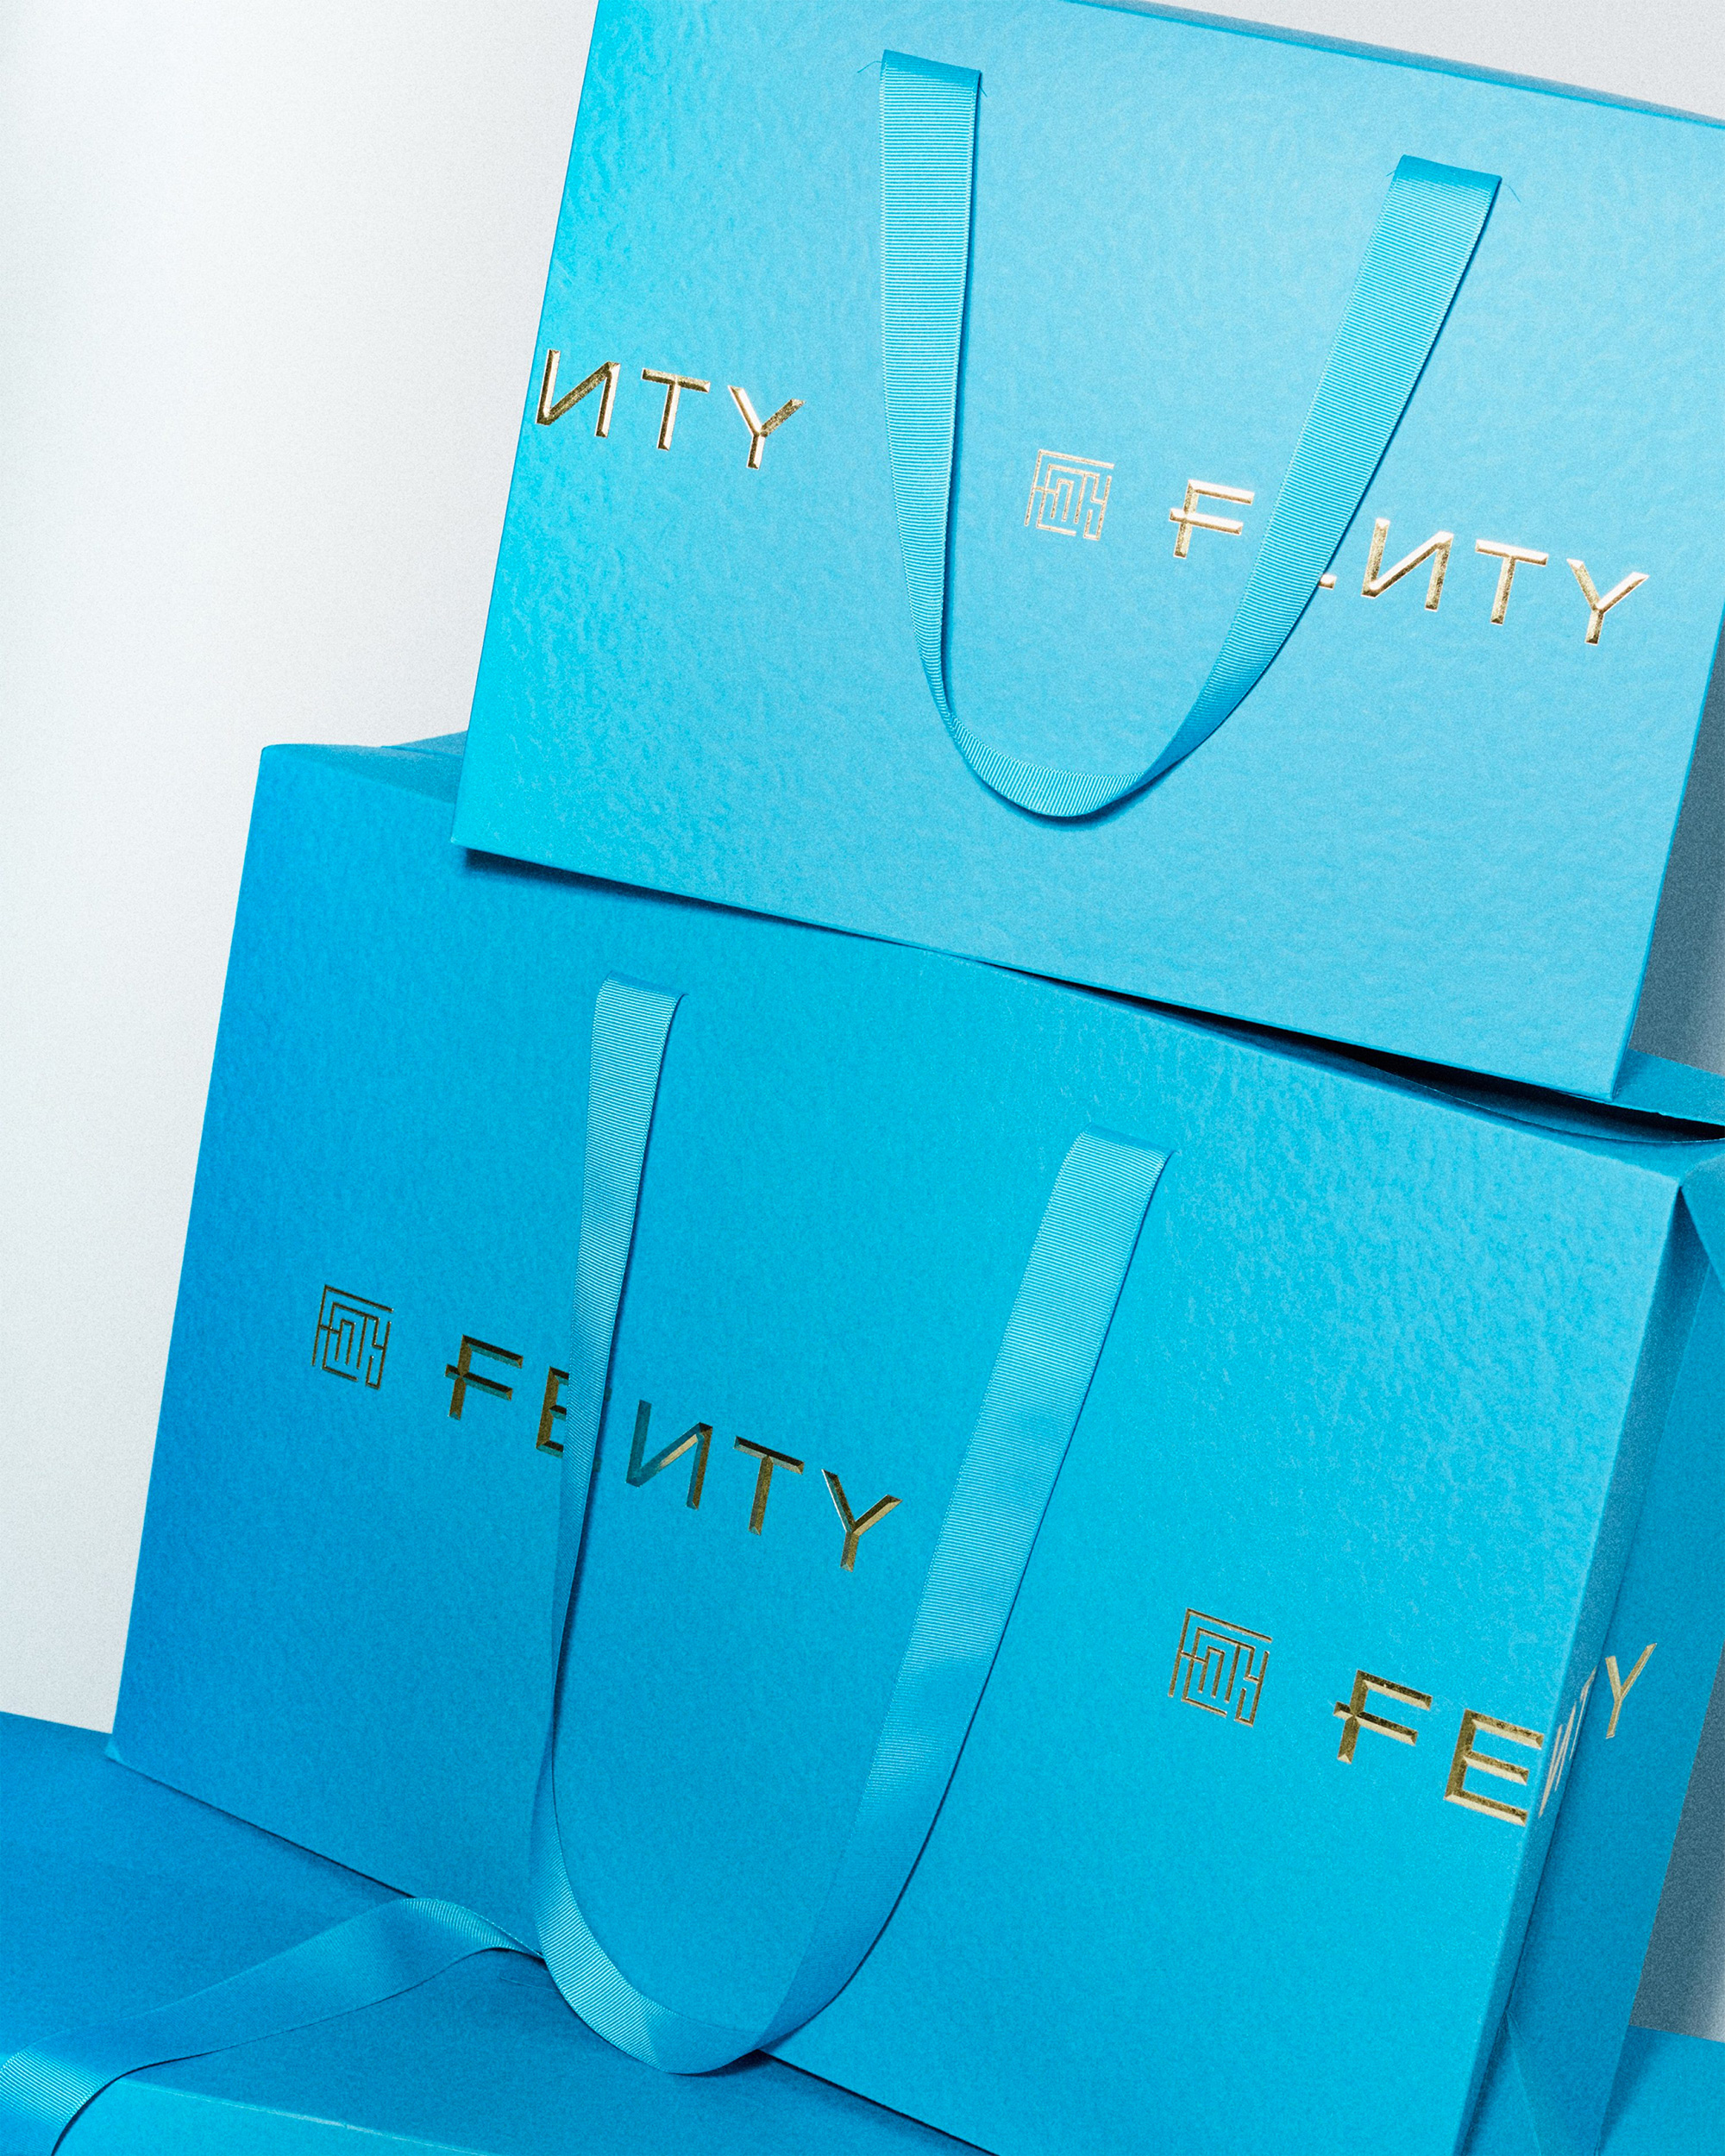 Brand New: New Logo, Identity, and Packaging for FENTY – WindowsWear